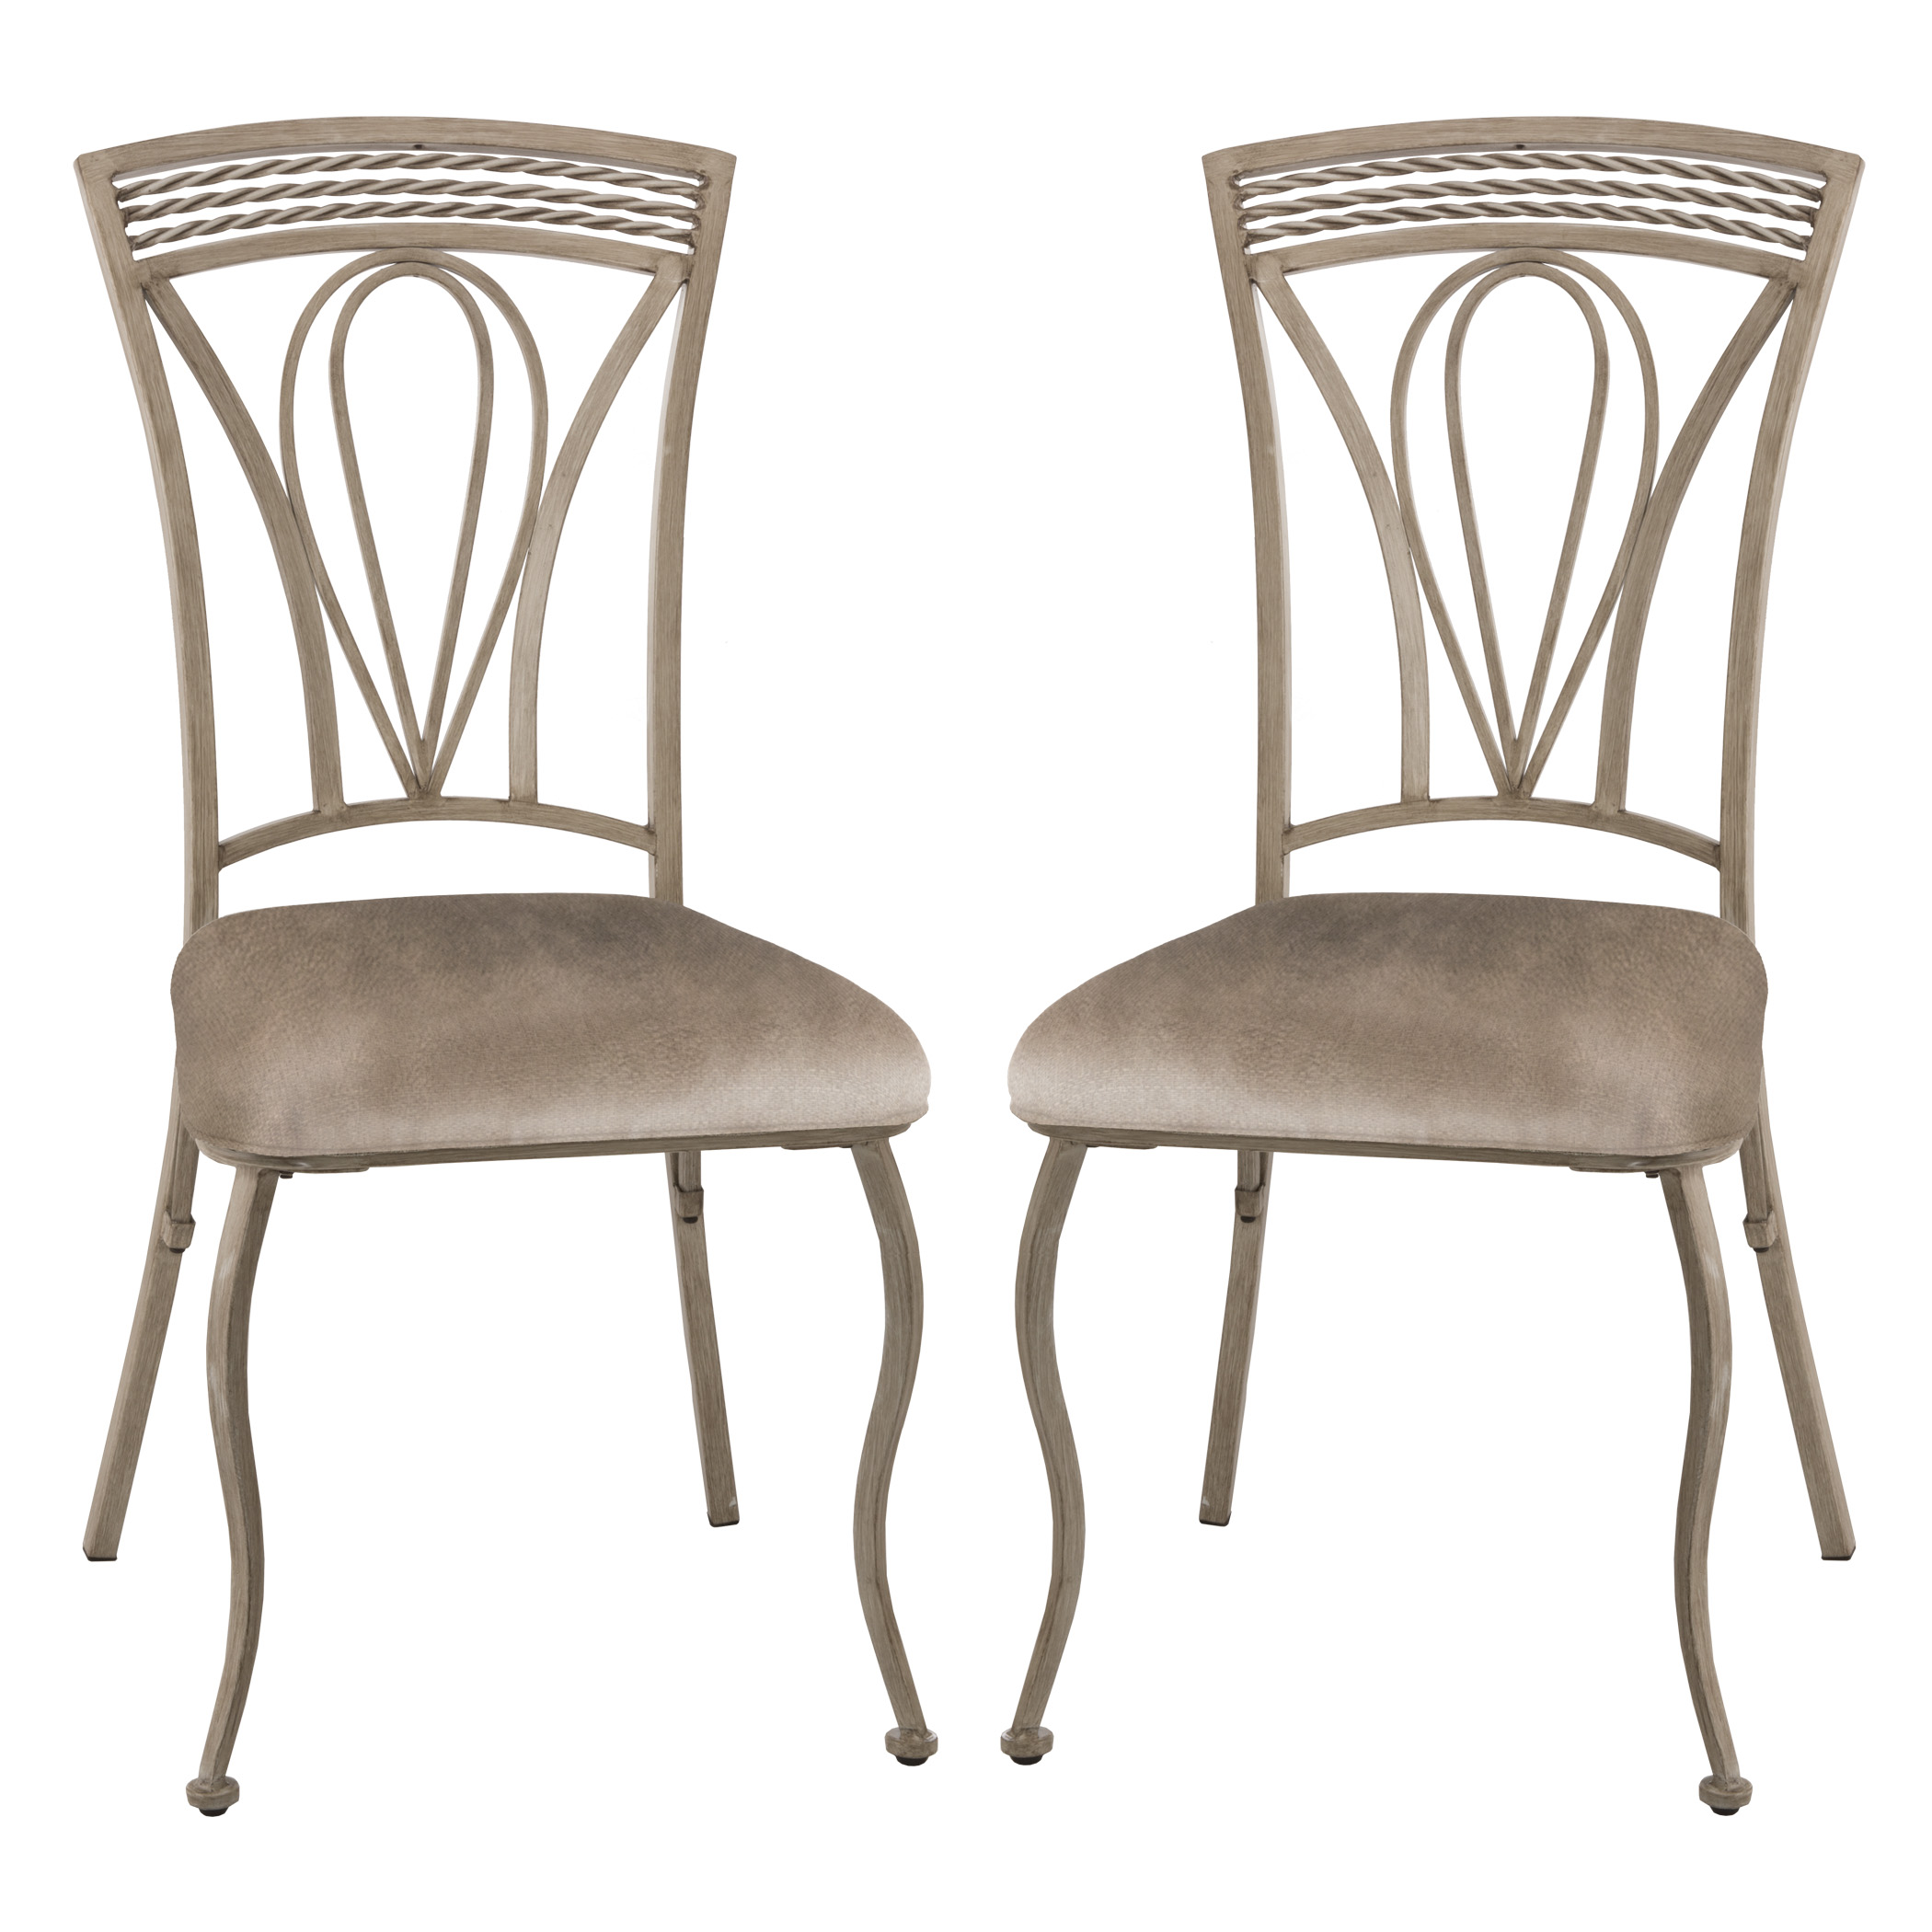 Napier Metal Dining Chair, Set of 2